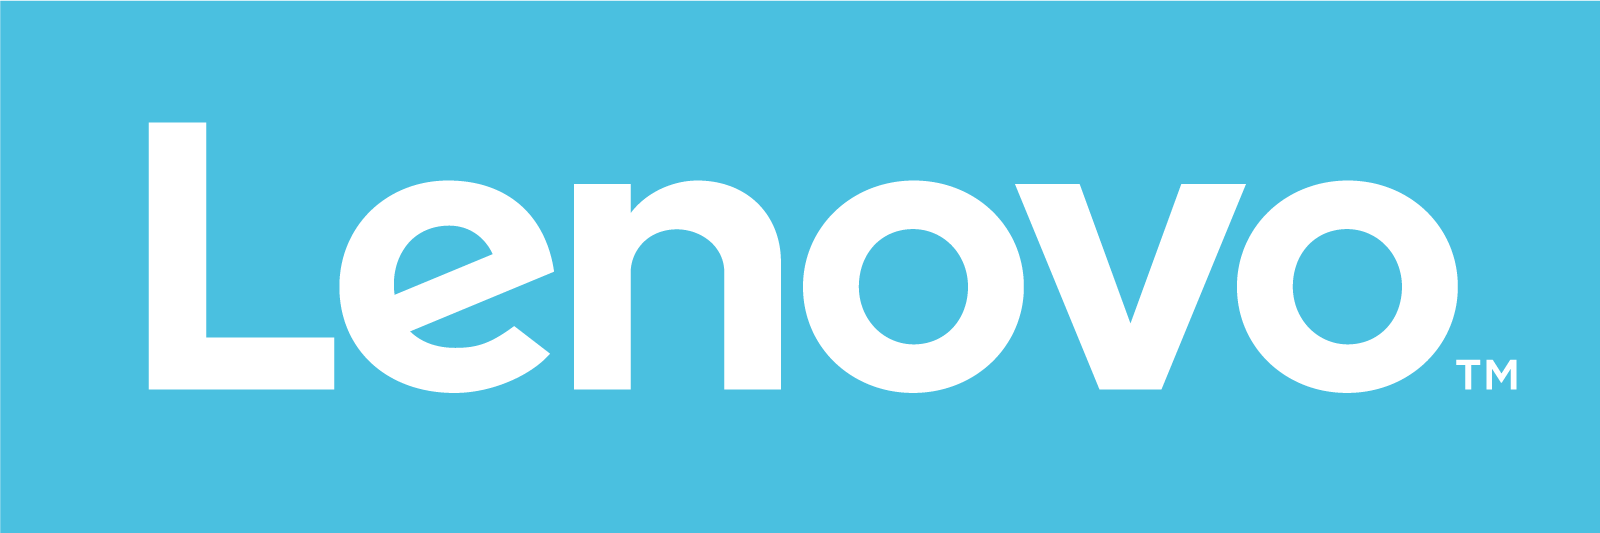 Light Blue Logo - Lenovo's new logo aims for “fashion brand” feel | Marketing Interactive